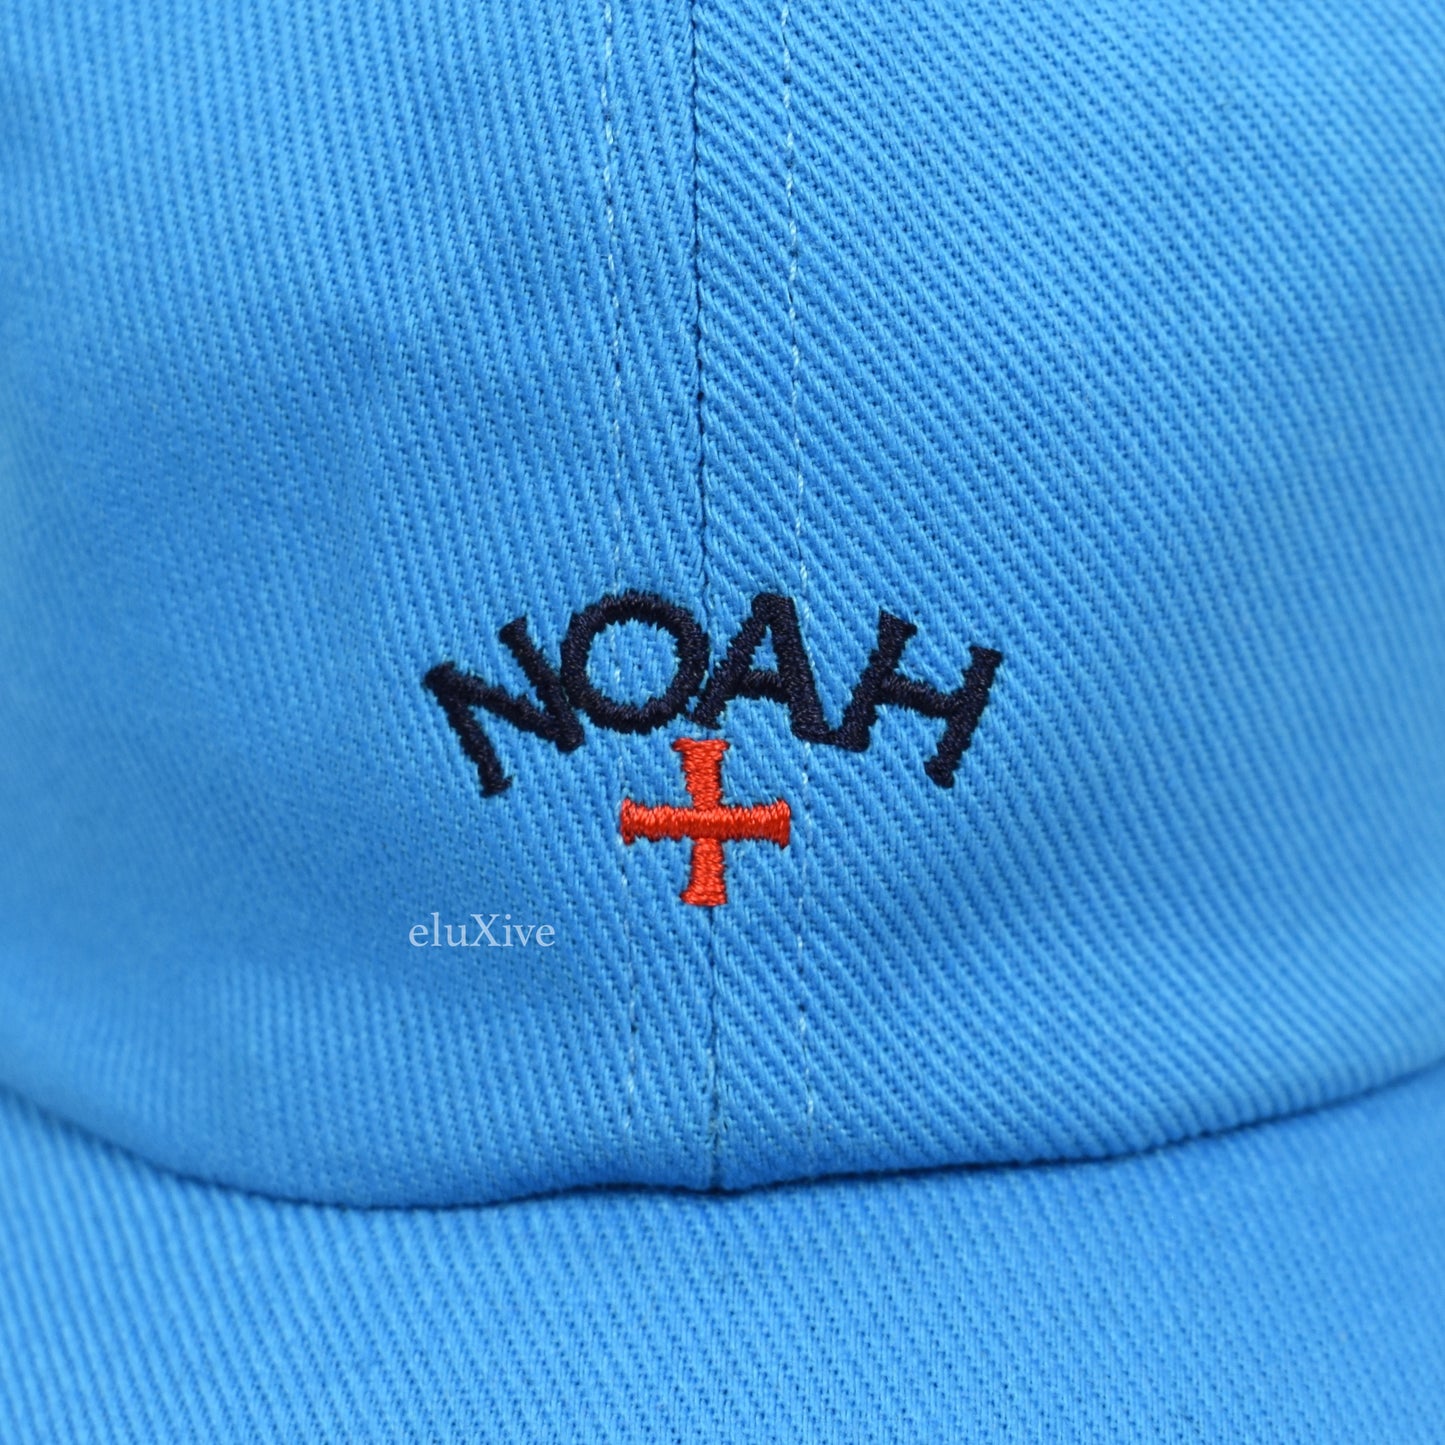 Noah - Turquoise Core Logo Hat (SS19)